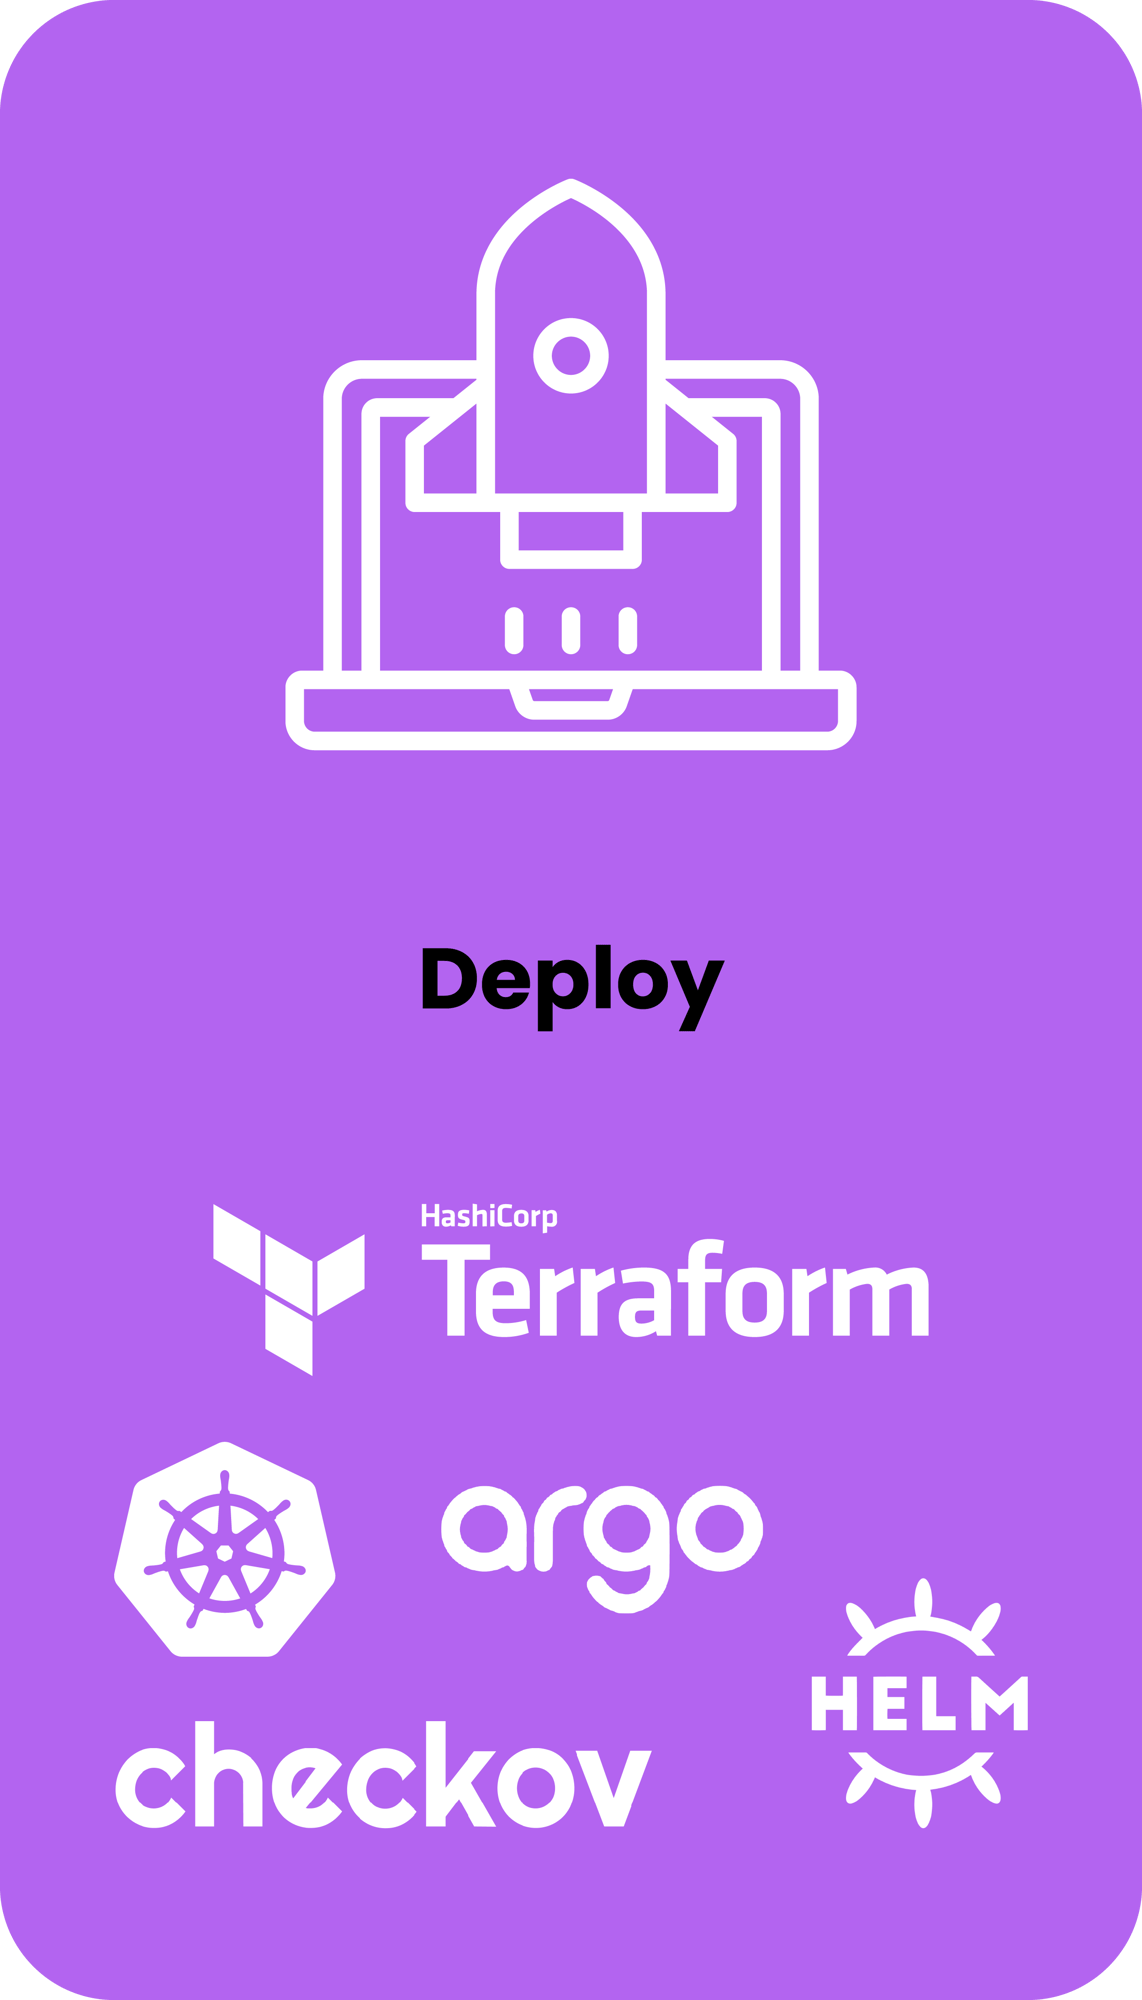 Deploy. Technologies include Terraform, Argo, Kubernetes, Helm, and Checkov.